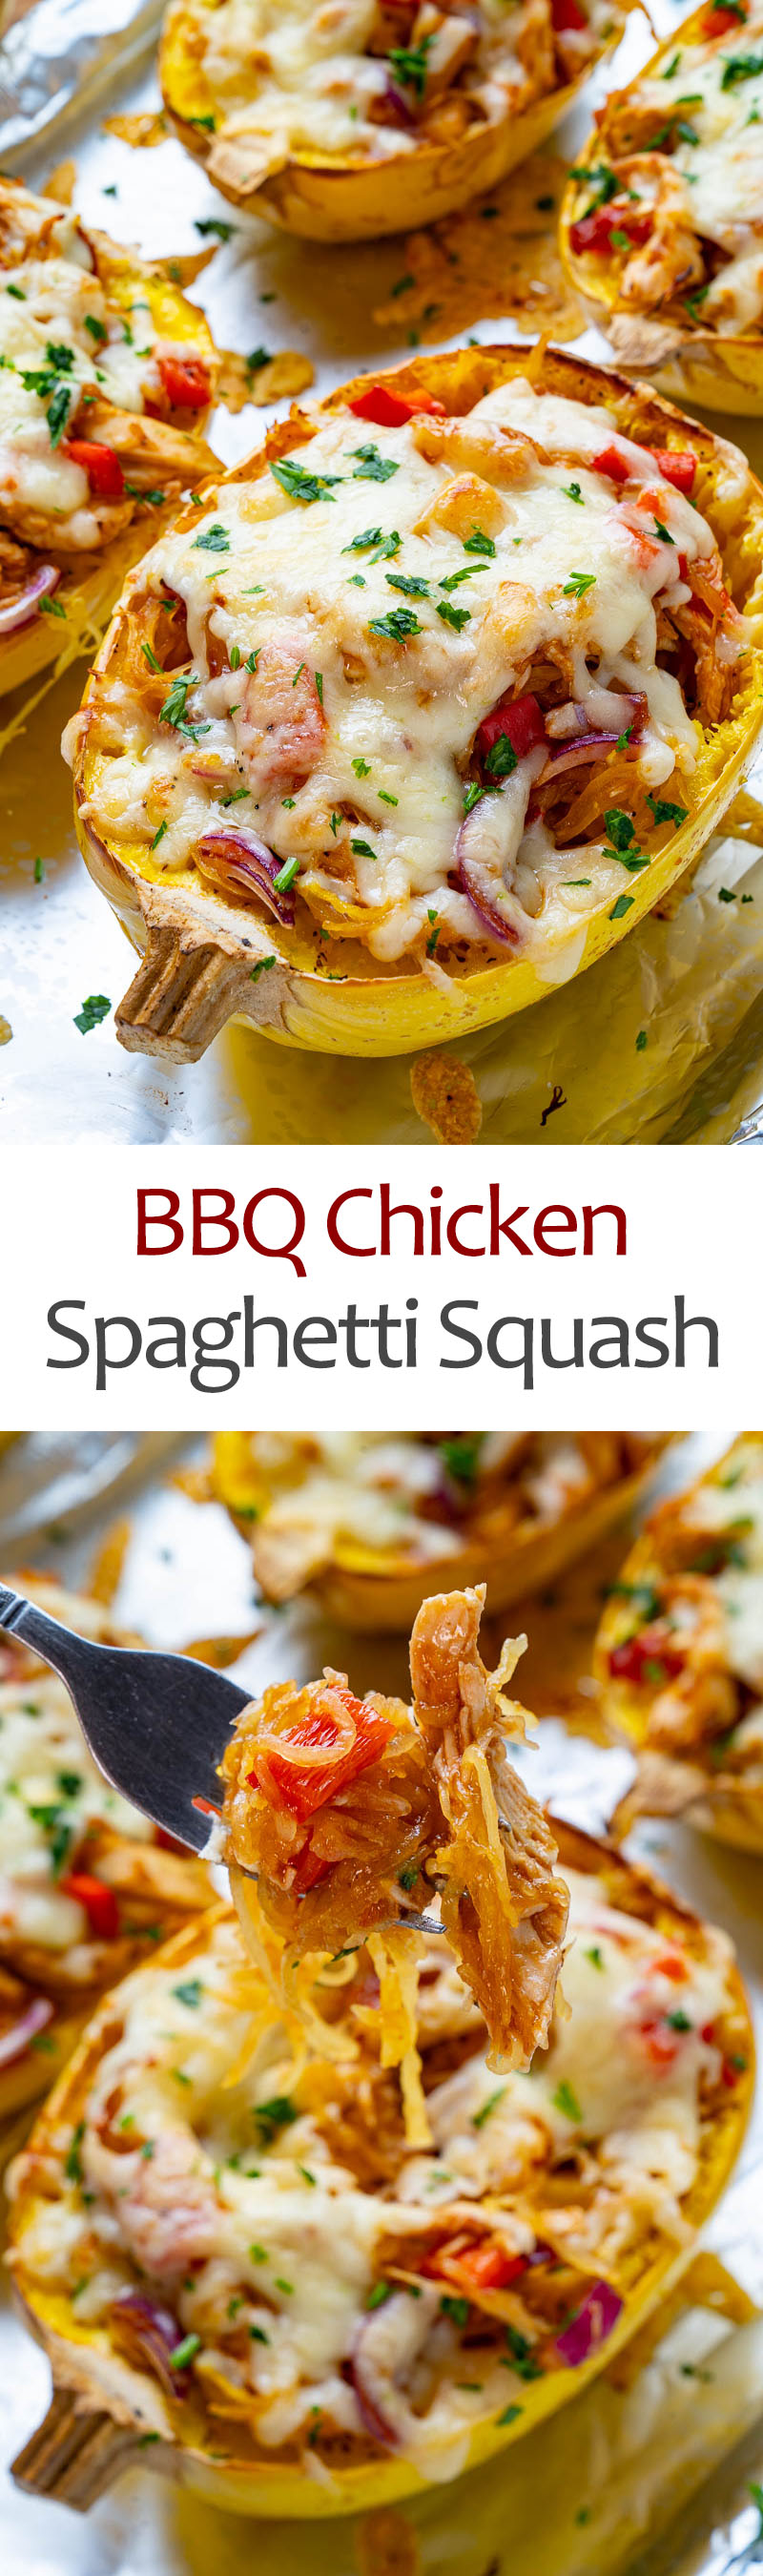 BBQ Chicken Stuffed Spaghetti Squash